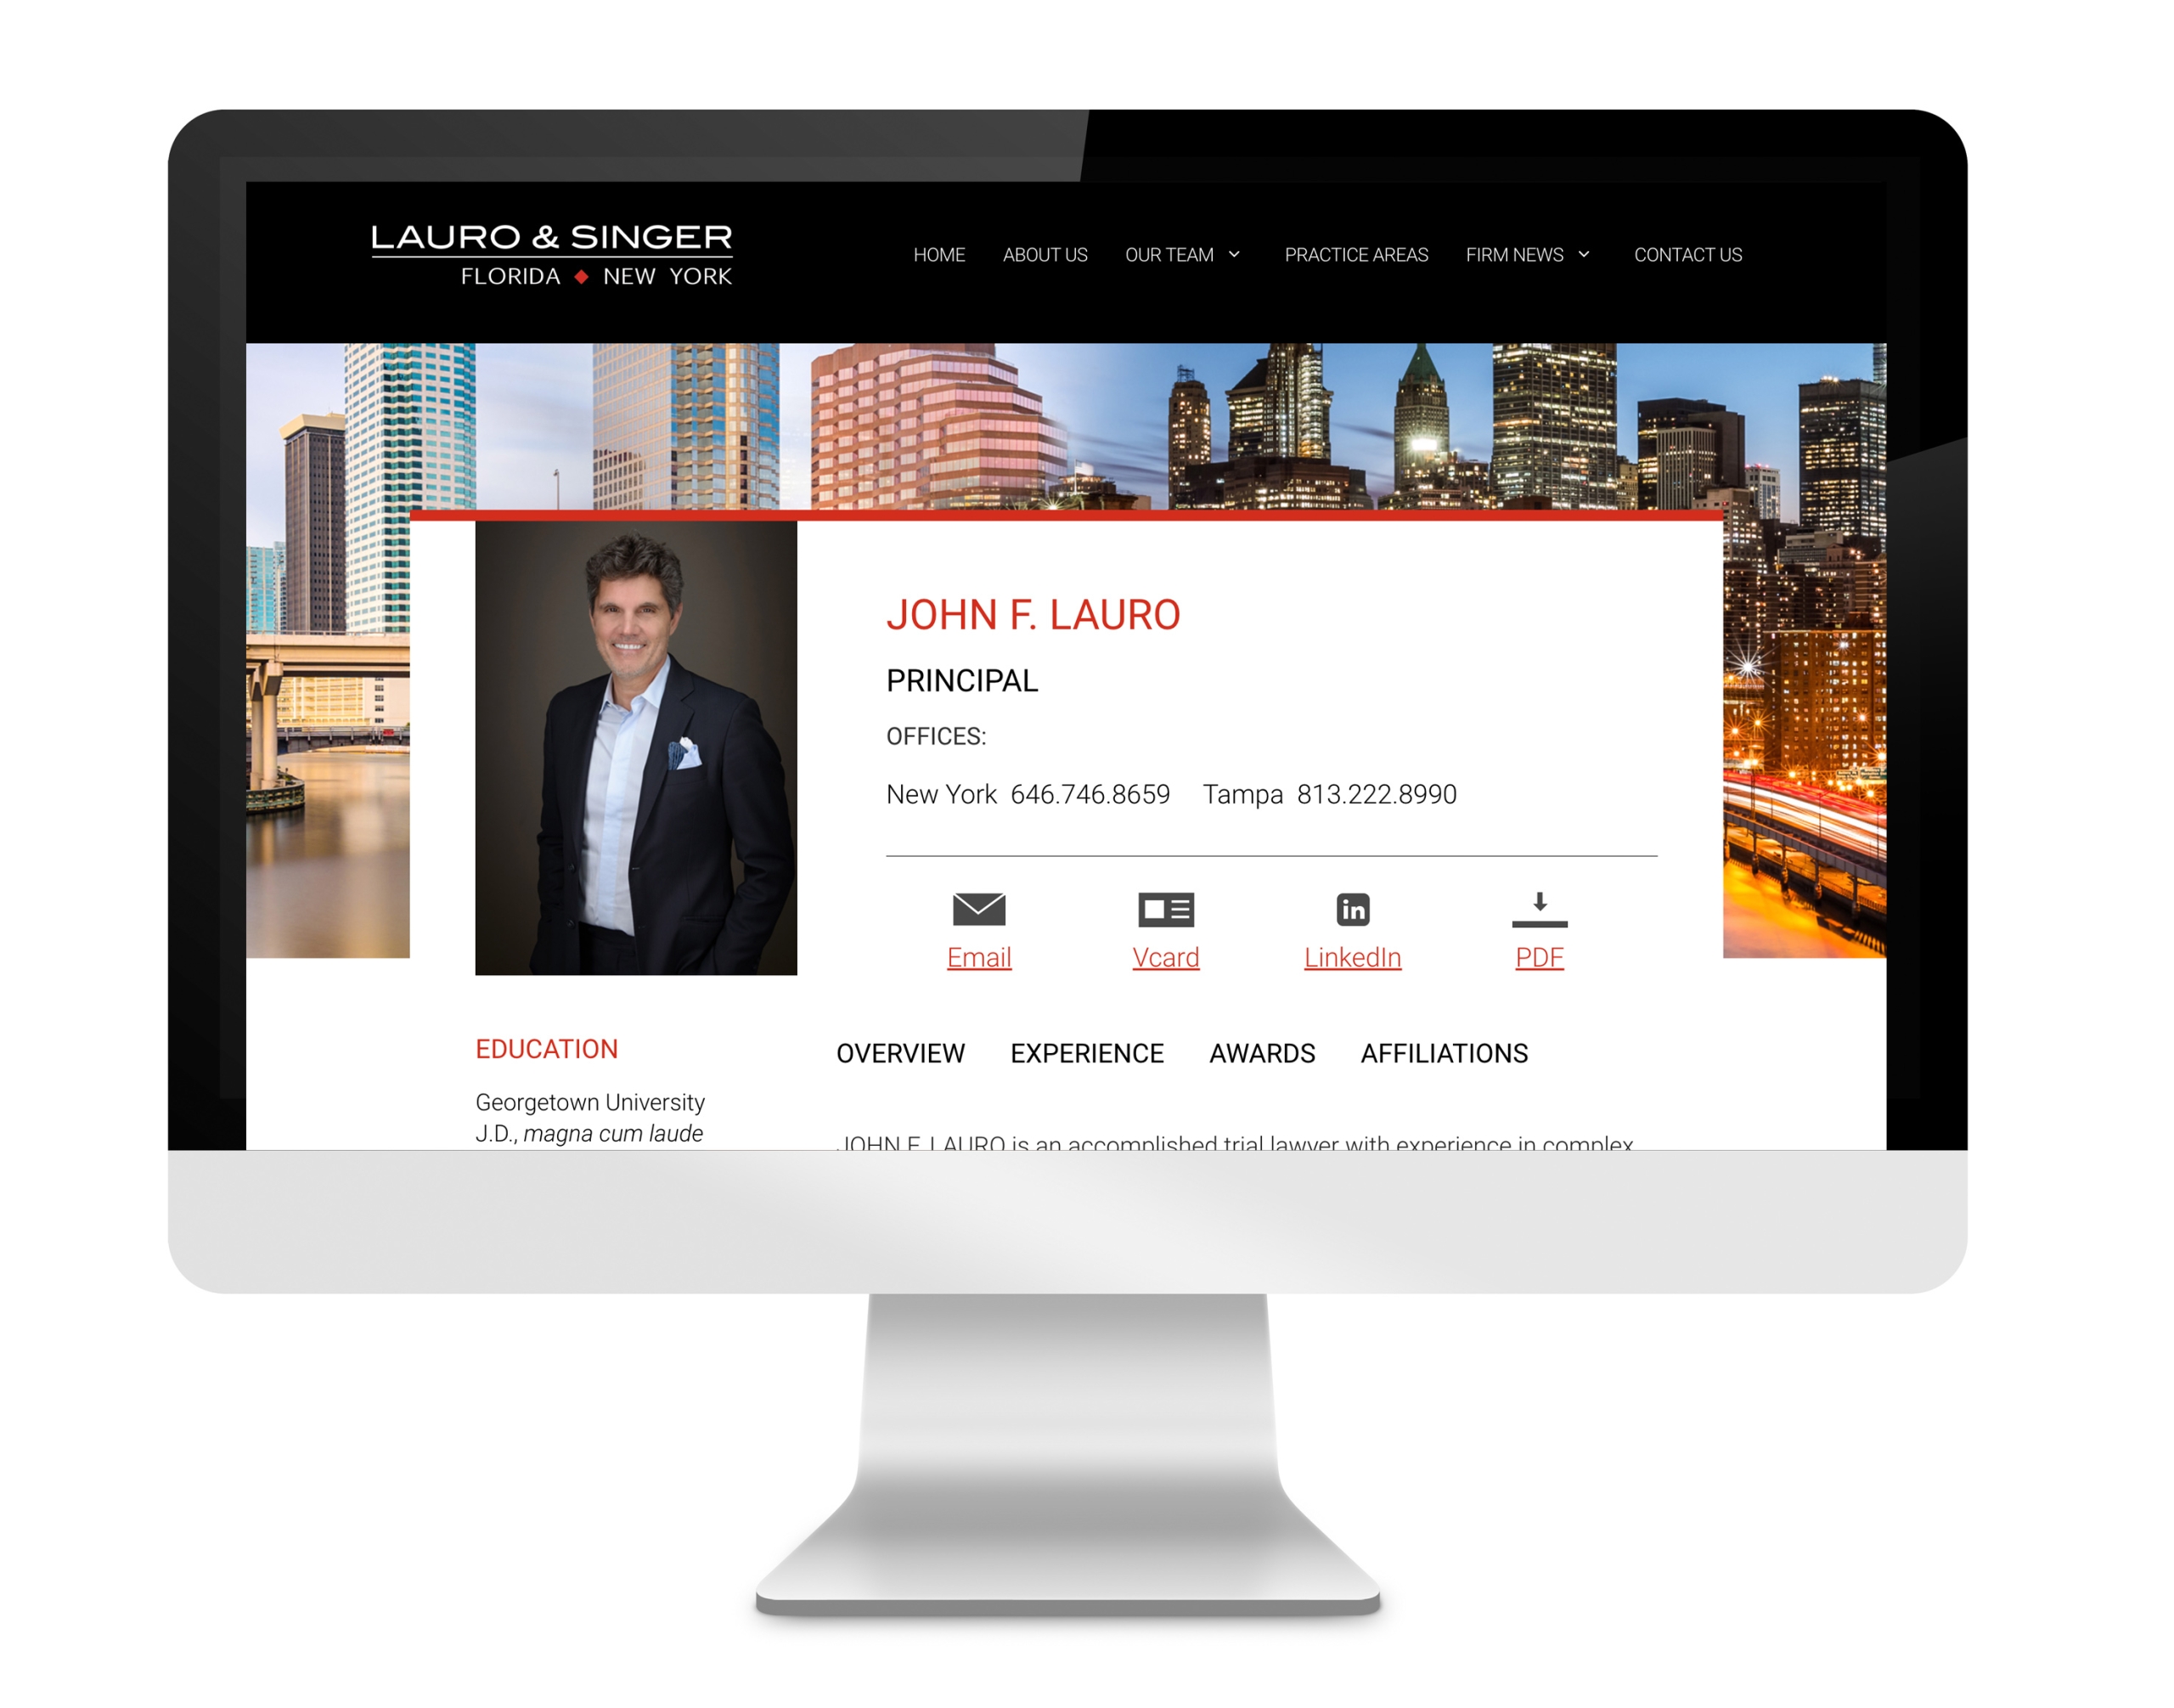 Lauro & Singer website design by DLS Design